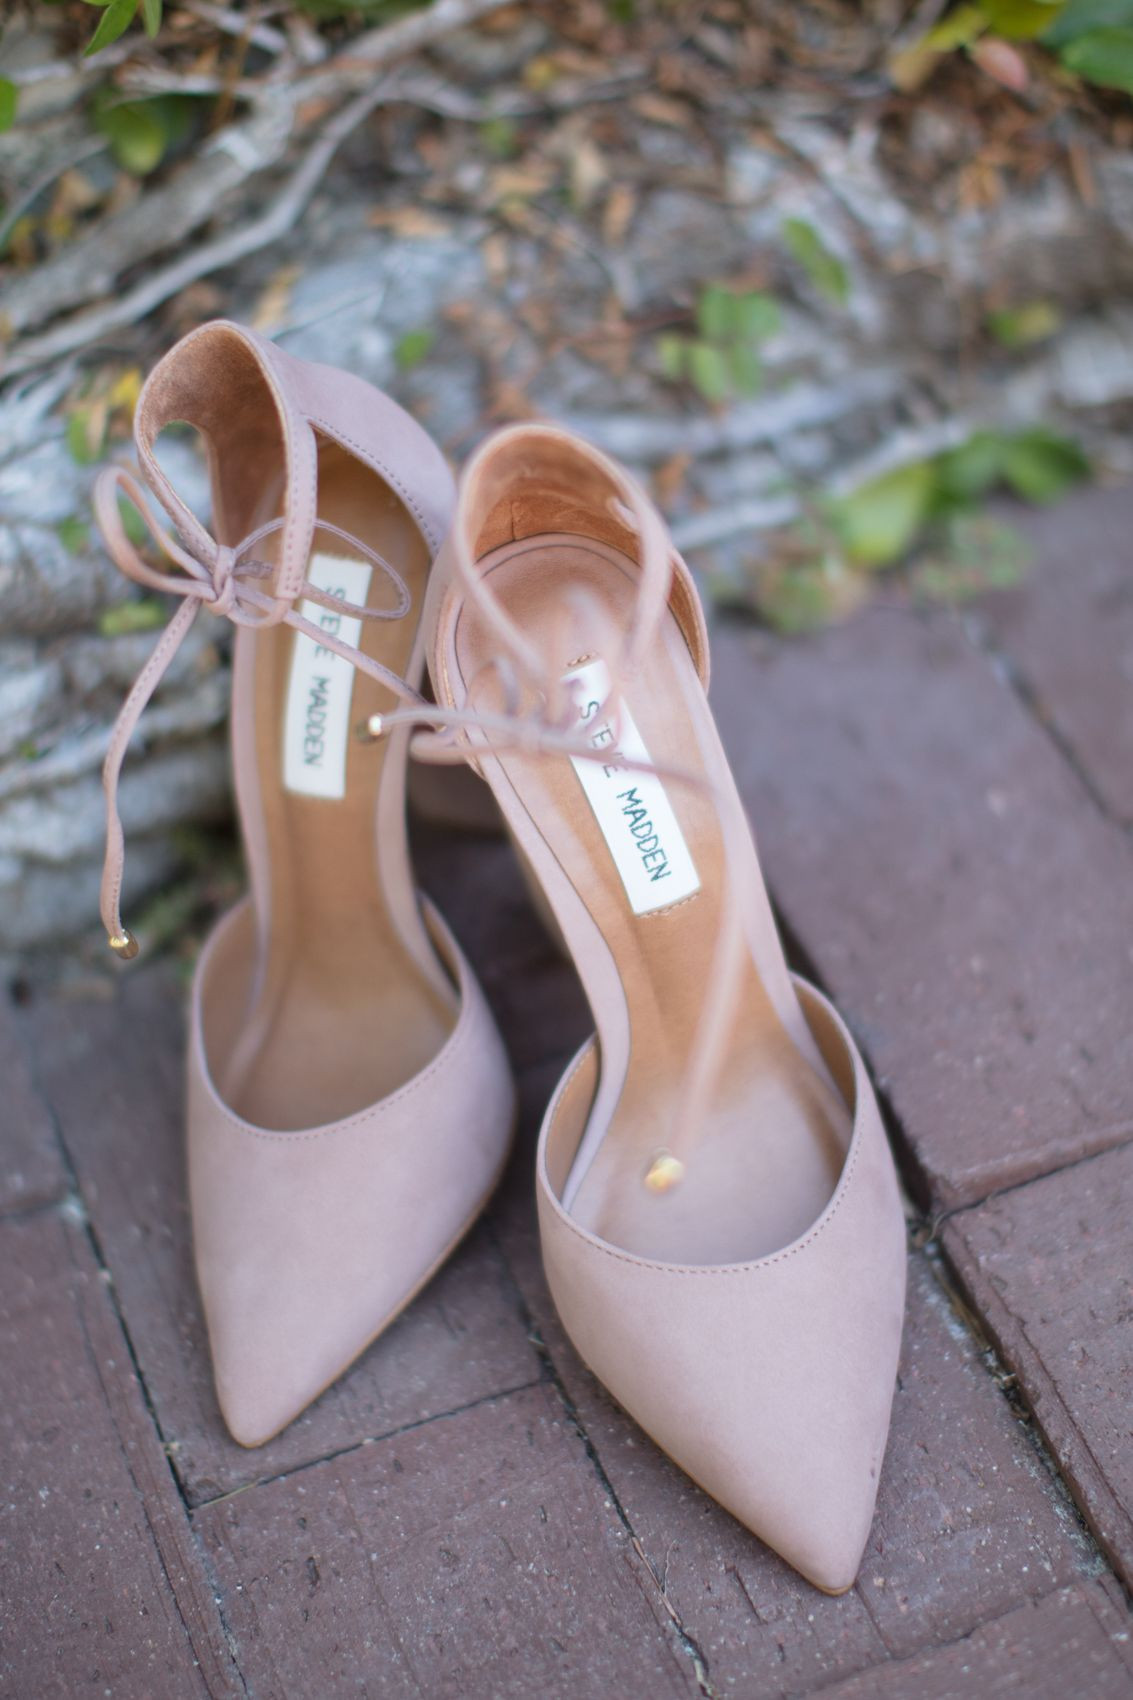 Blush Colored Wedding Shoes
 blush colored wedding shoes heels Charleston